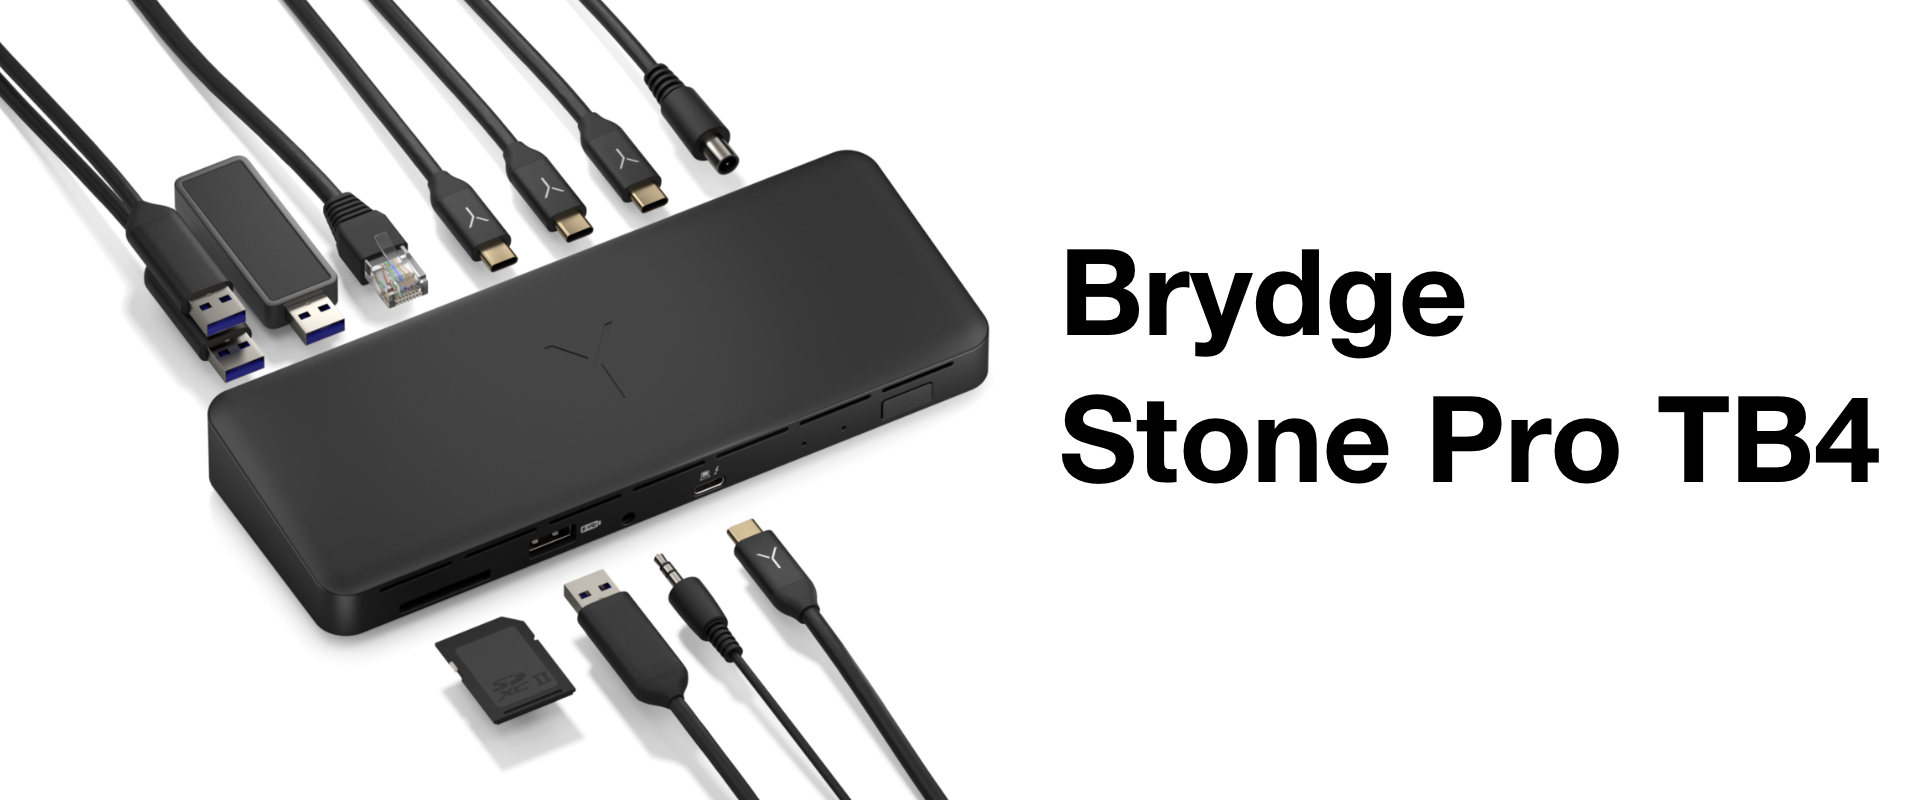 Brydge Stone Pro TB4